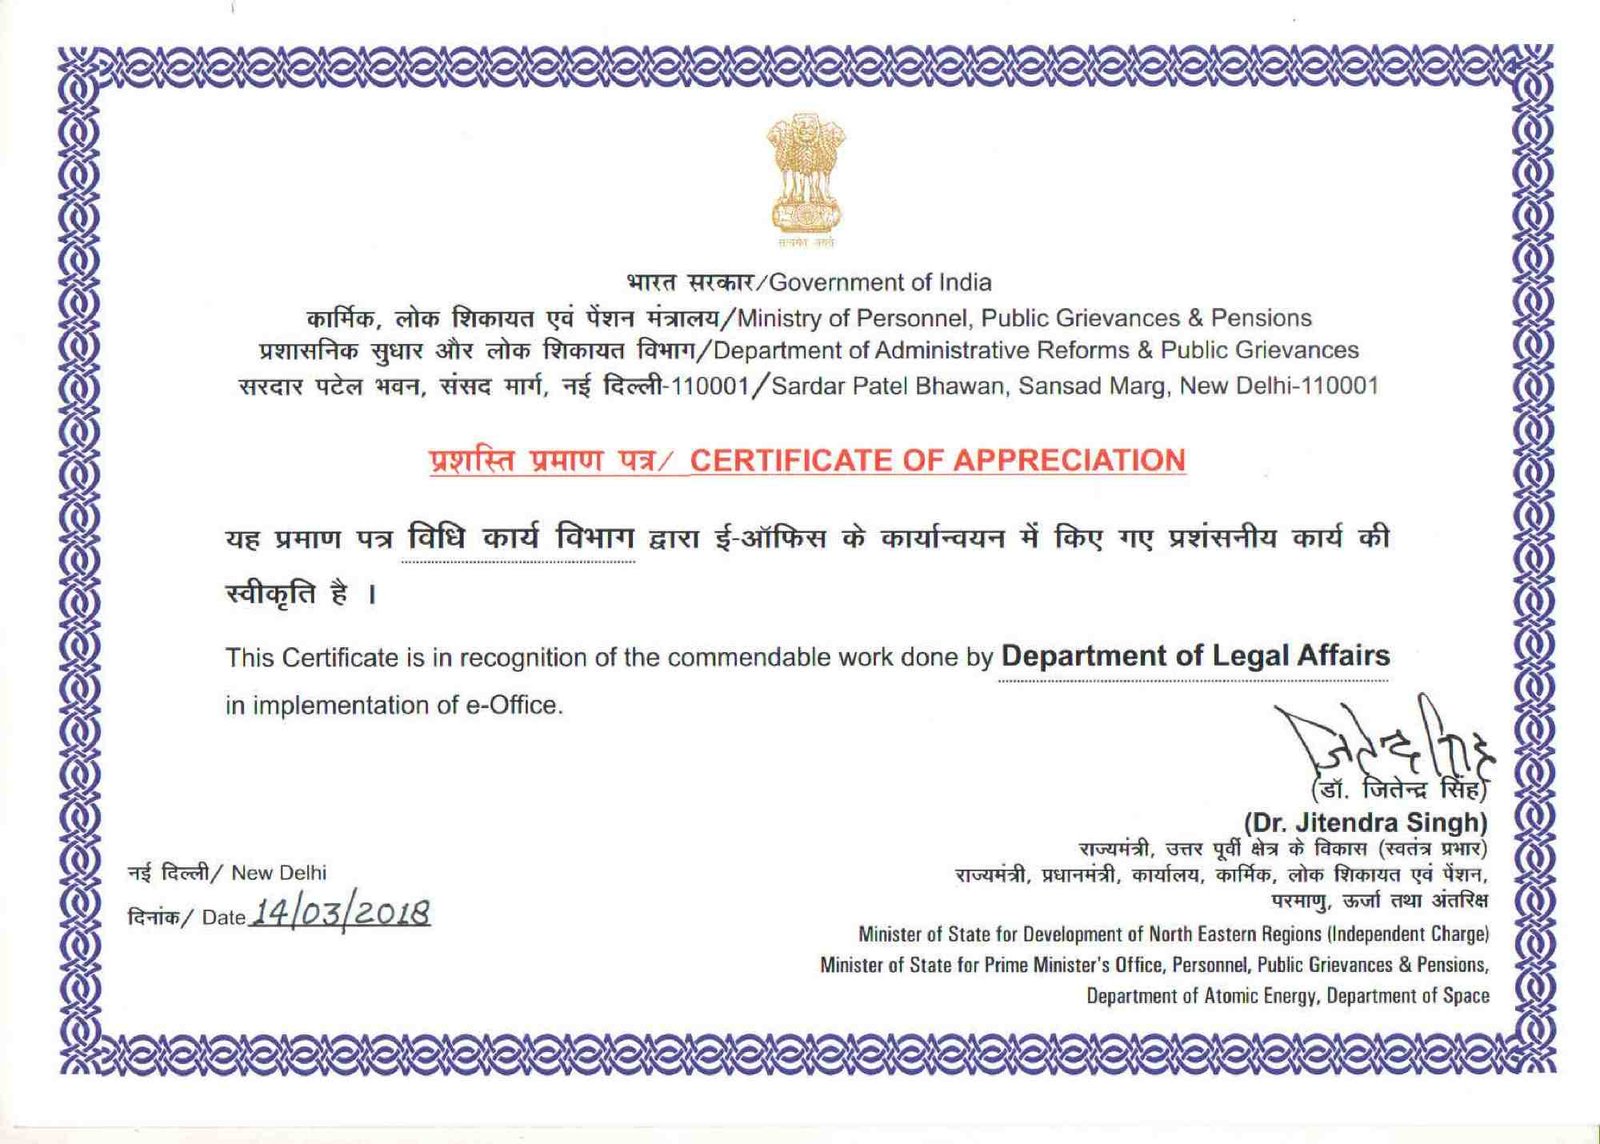 Appreciation certificate of Department of Legal Affairs